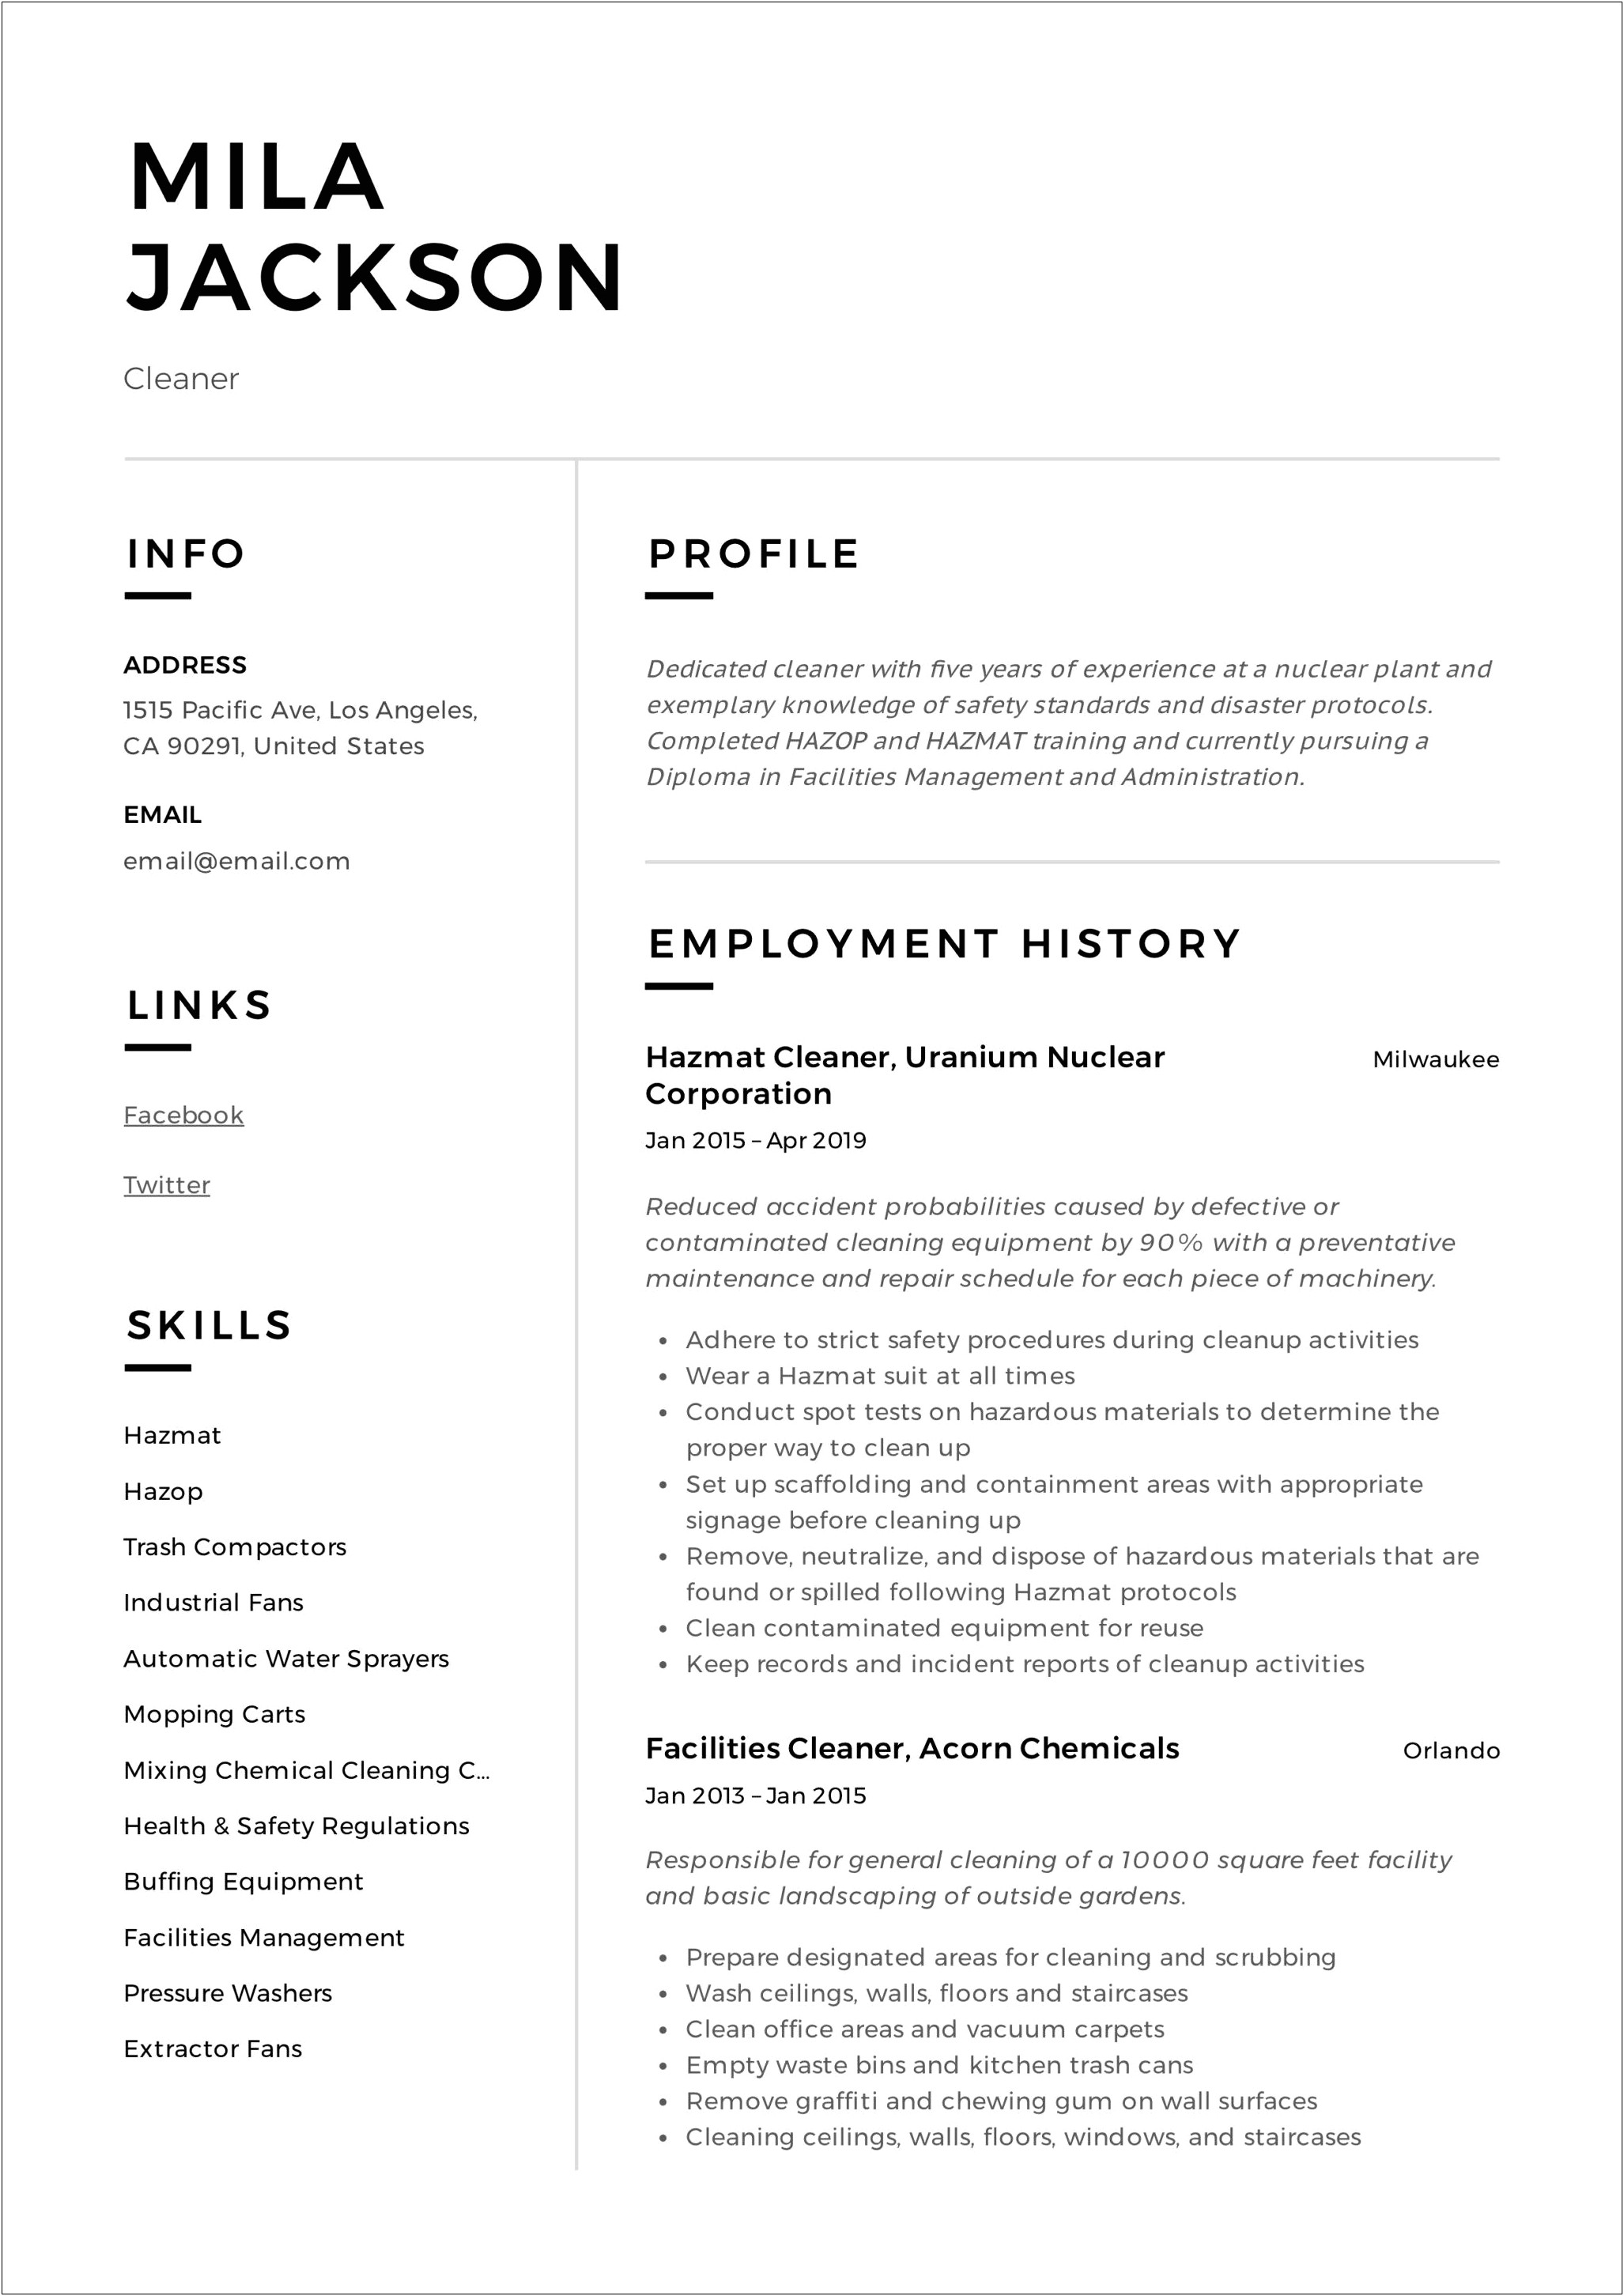 Cleaning Medical Facilities Job Description Resume